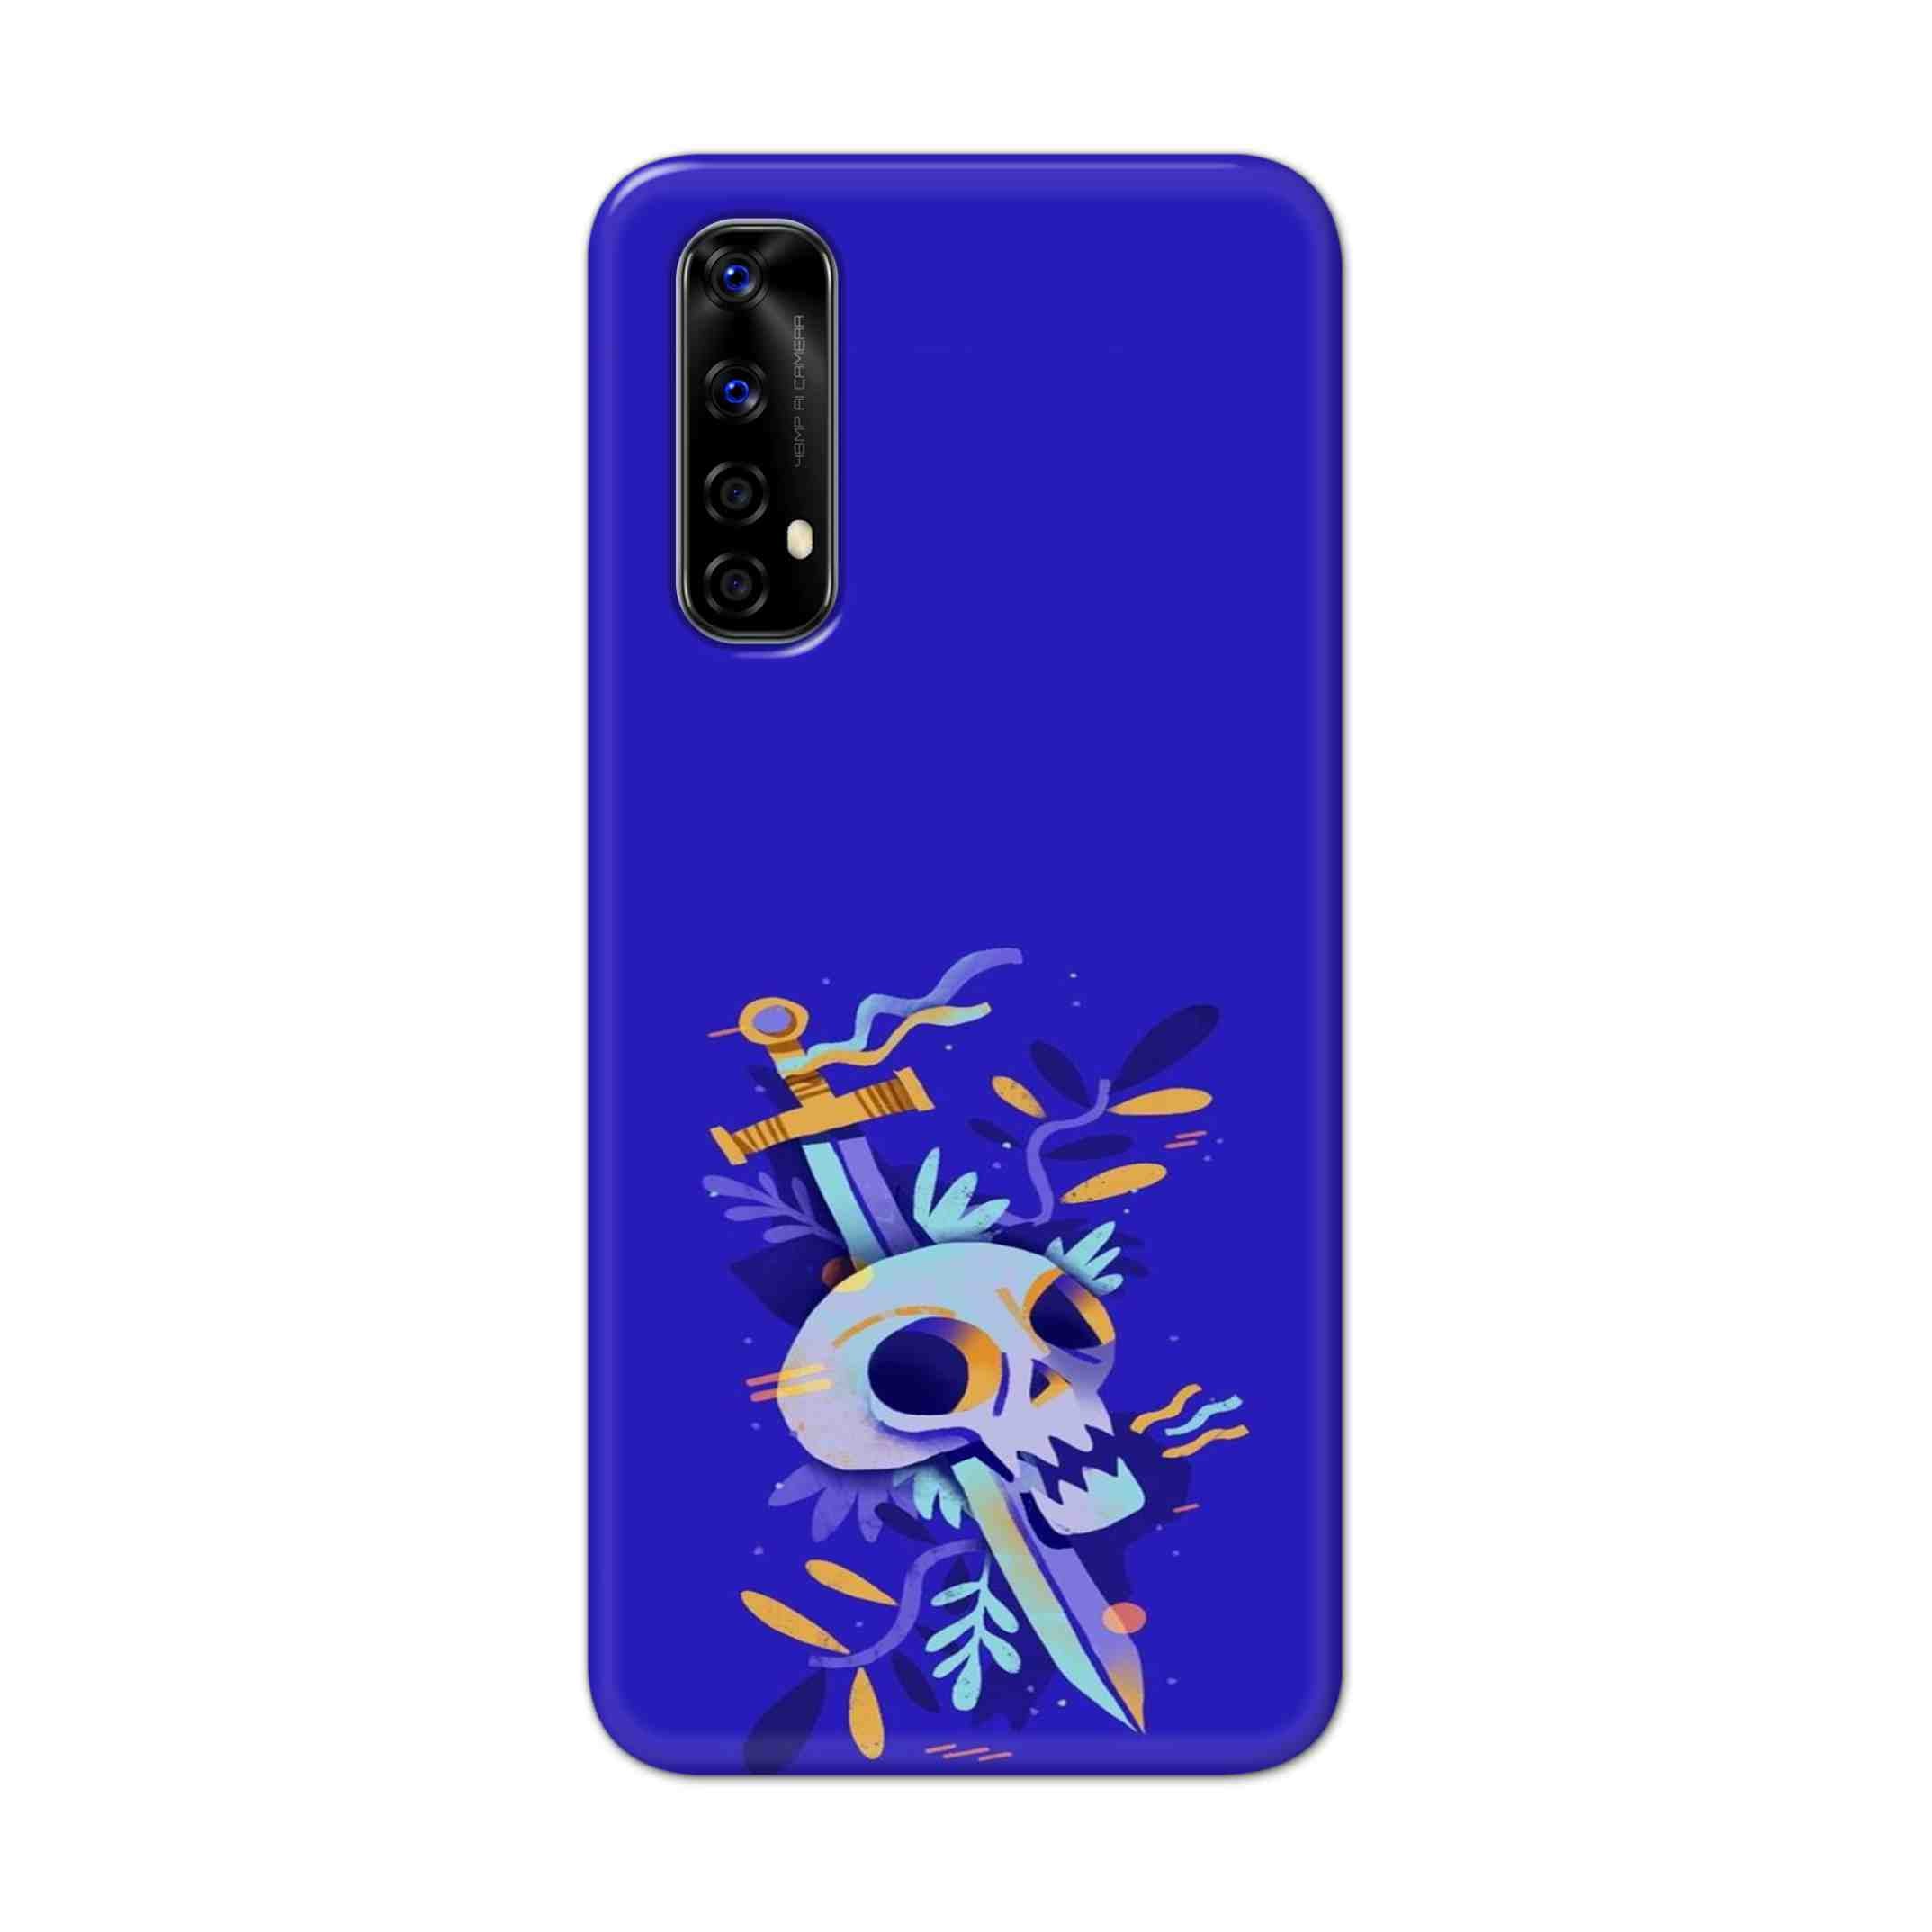 Buy Blue Skull Hard Back Mobile Phone Case Cover For Realme Narzo 20 Pro Online